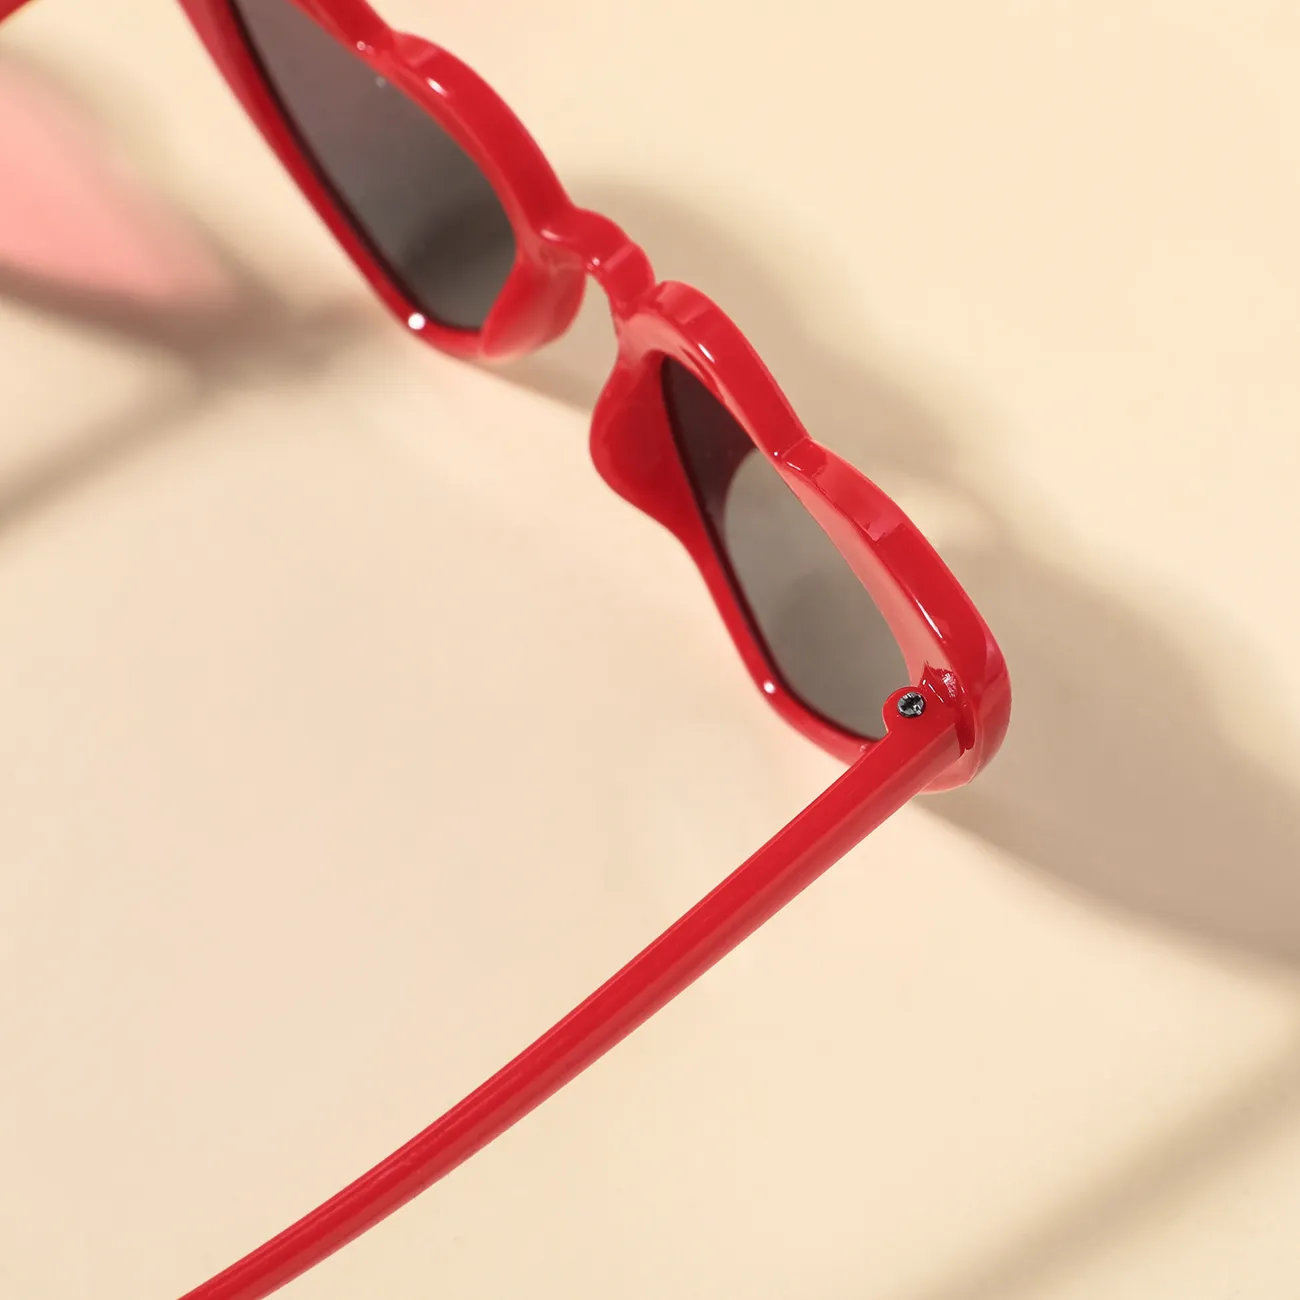 Kids Glasses Trendy Heart Plastic Frame Decorative Glasses (Random Glasses Case Color) Red big image 1